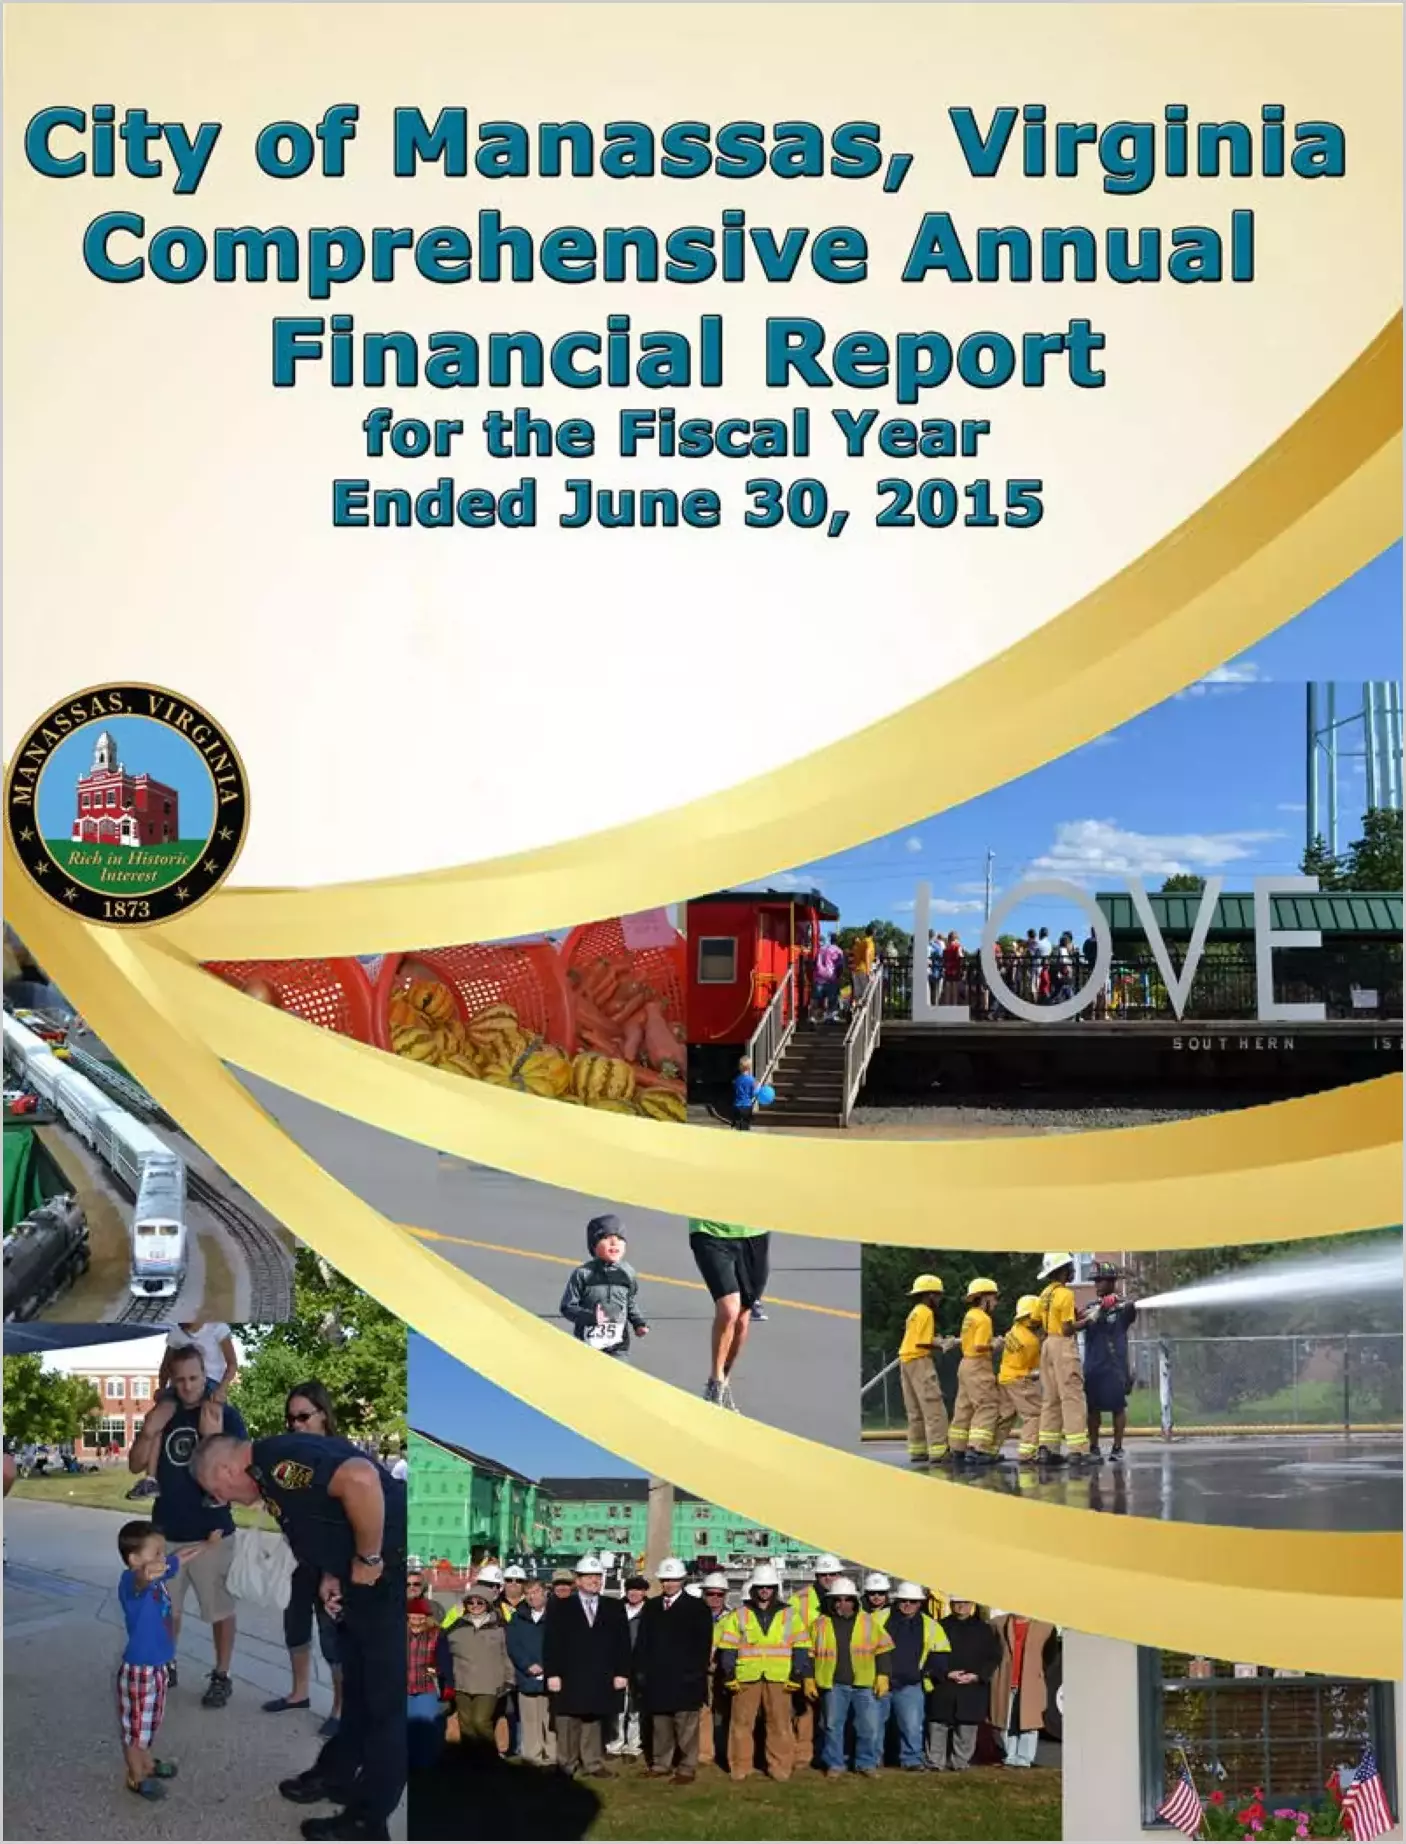 2015 Annual Financial Report for City of Manassas